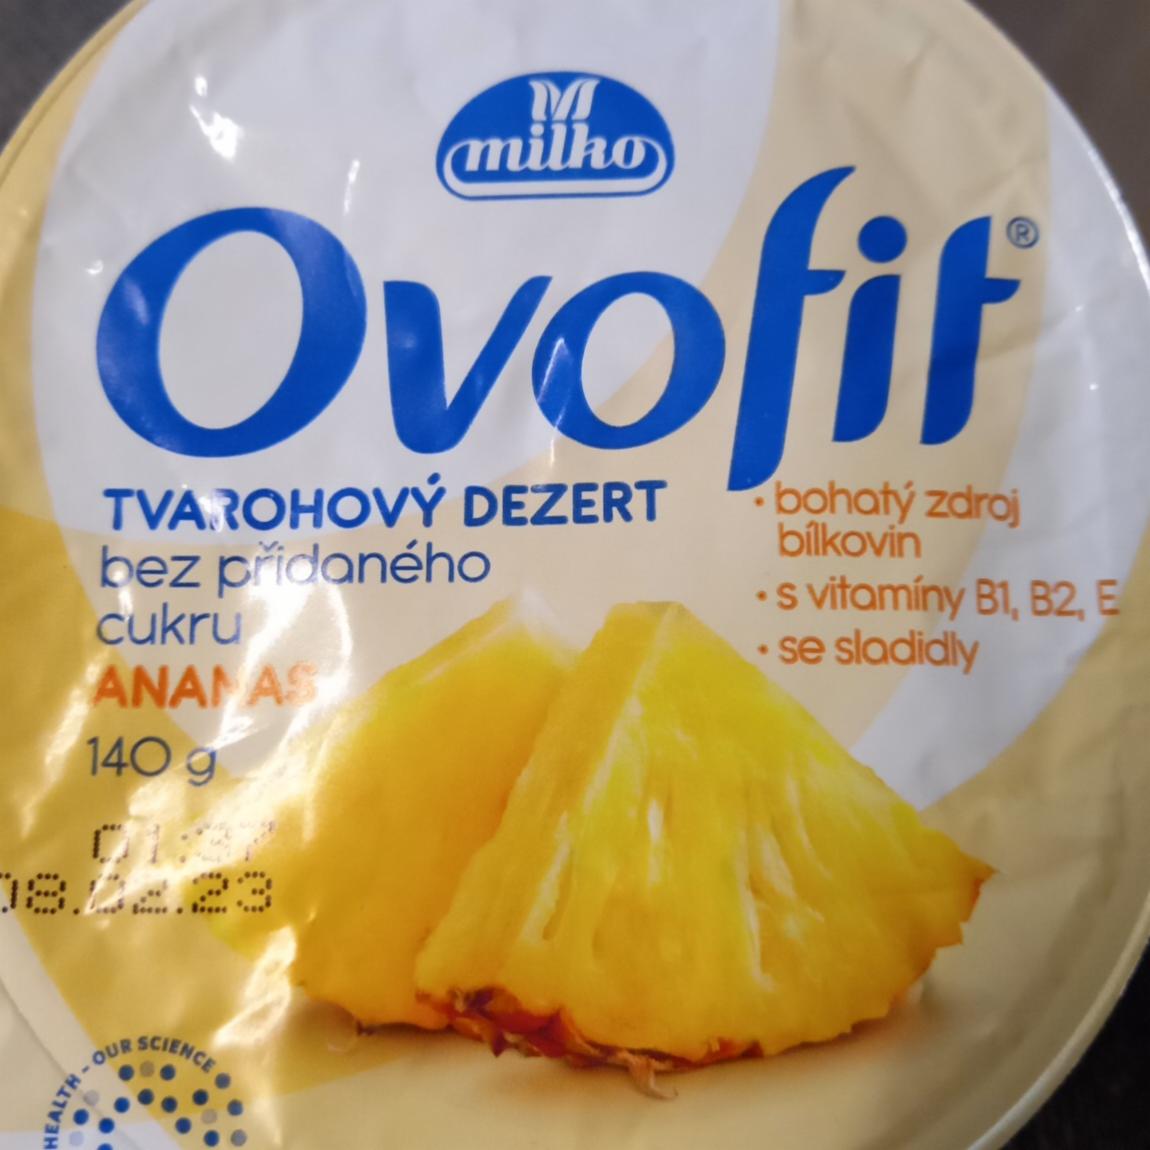 Fotografie - Ovofit tvarohový dezert ananasový Milko